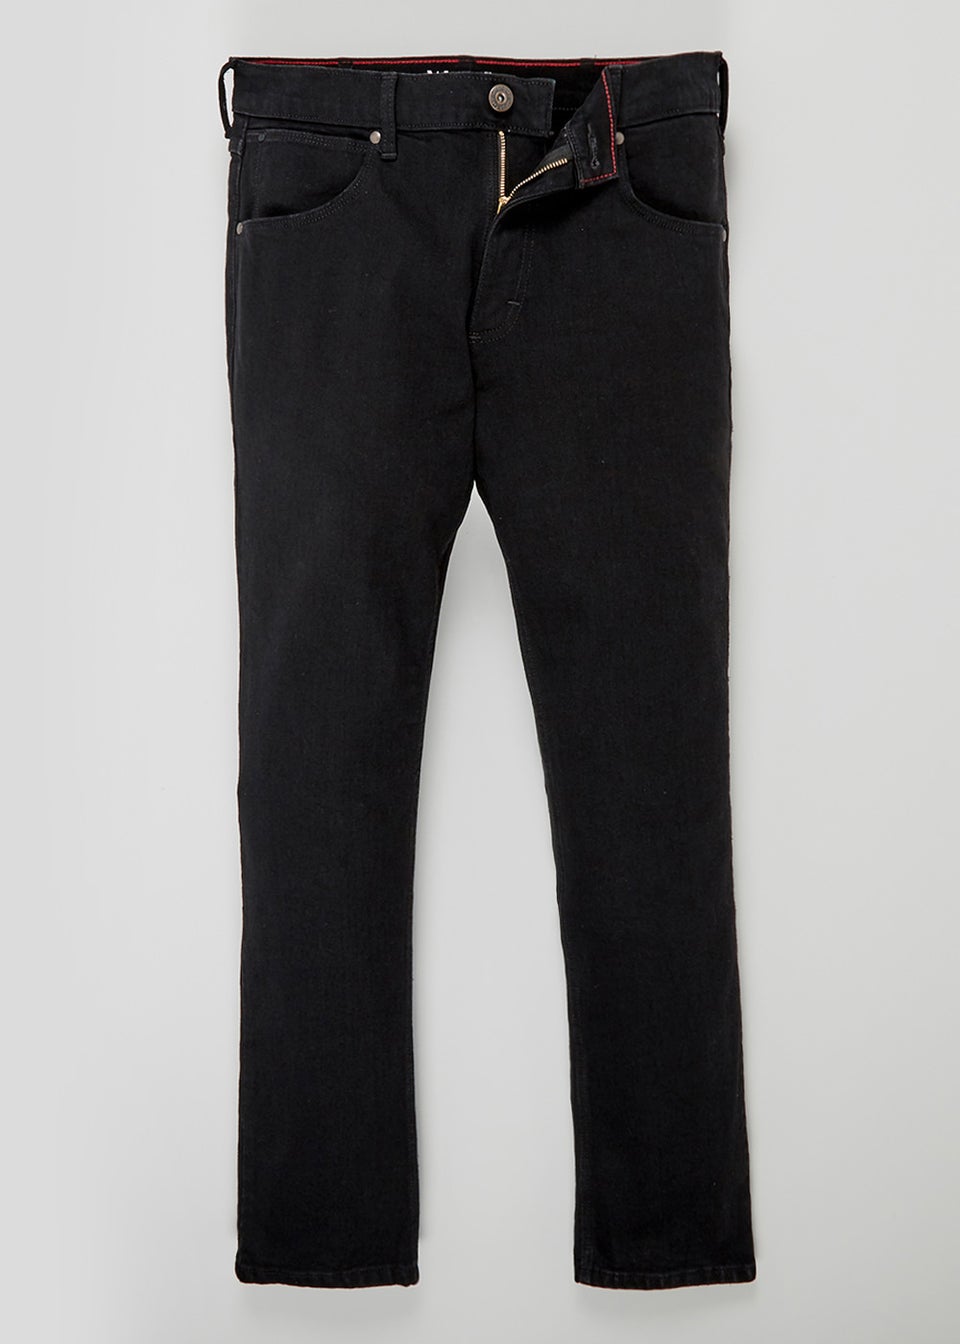 Wrangler Black Stretch Straight Fit Jeans